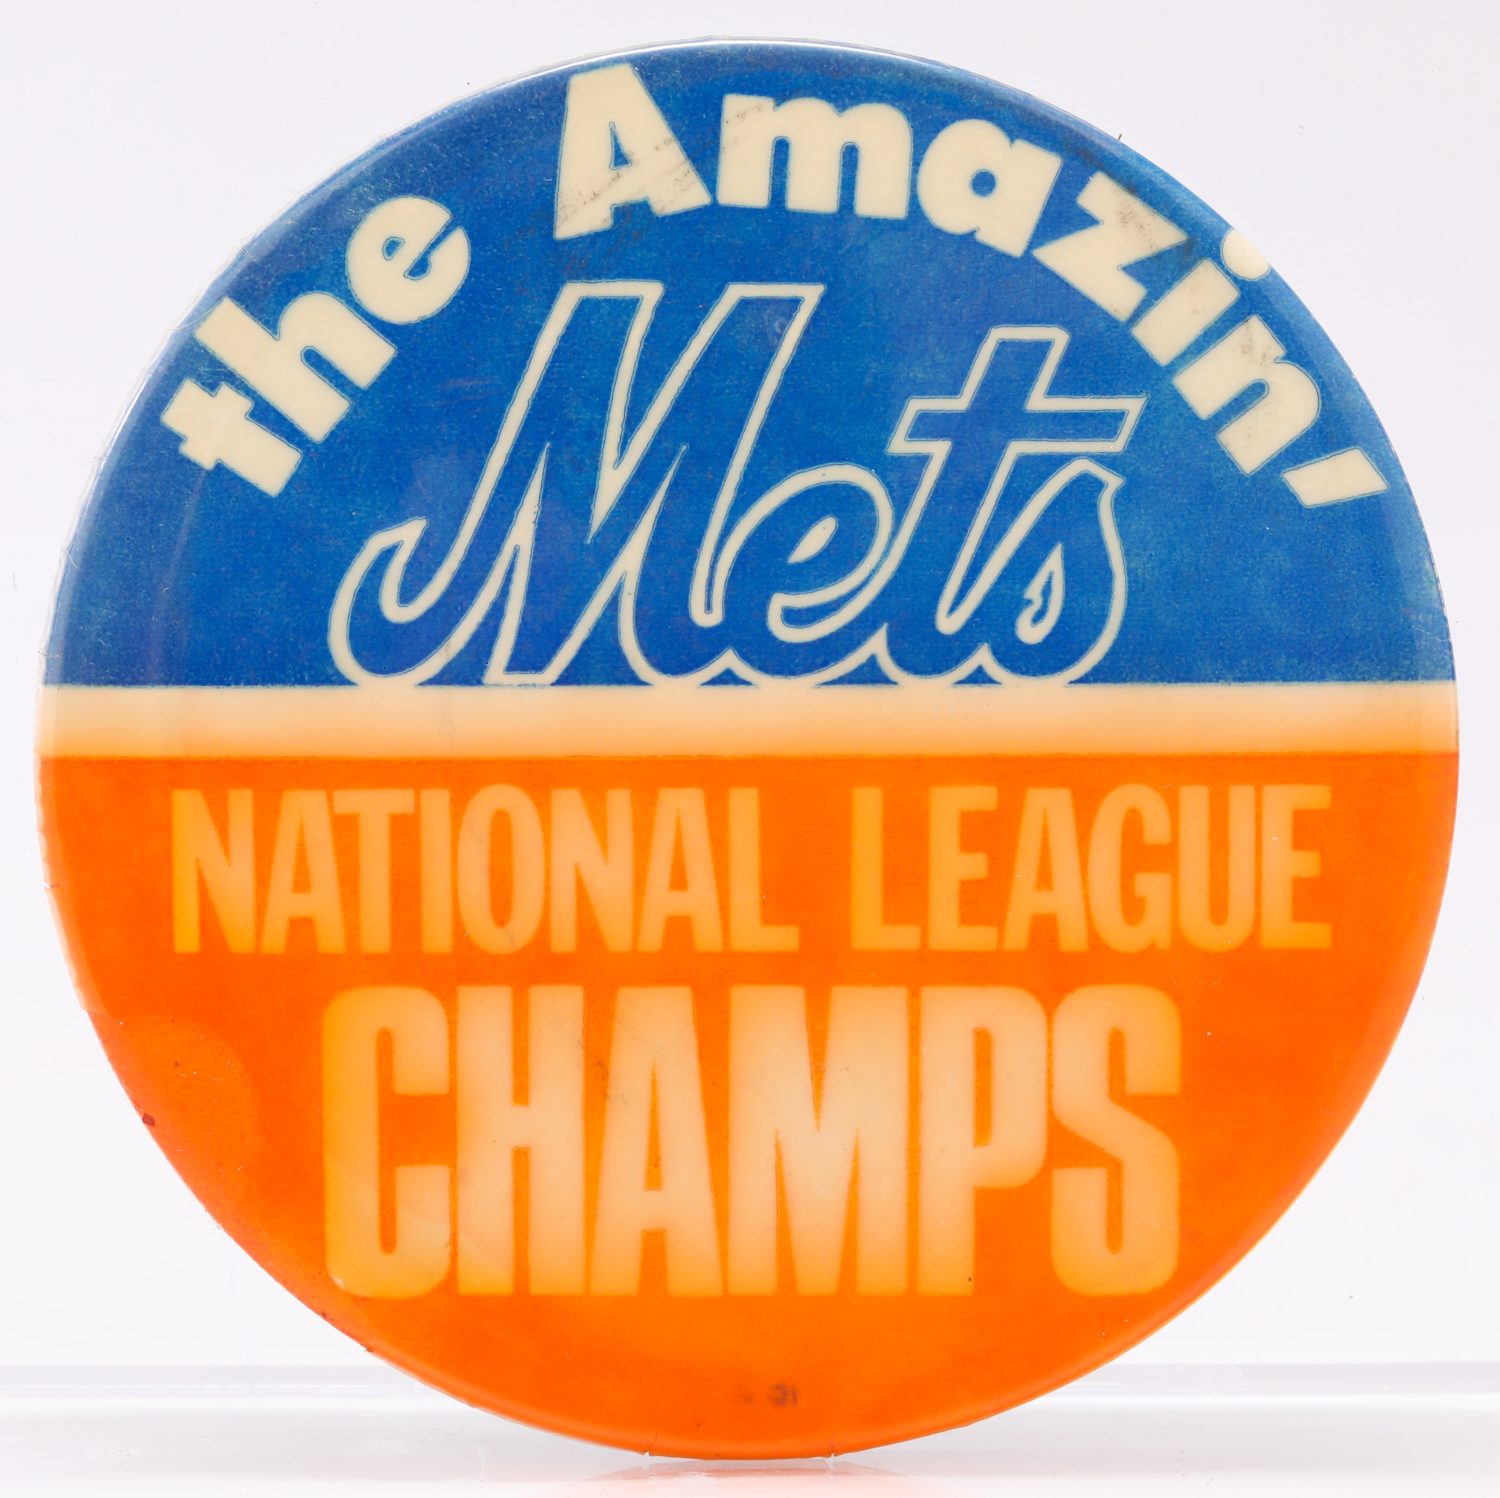 1969 Mets National League Champs Button